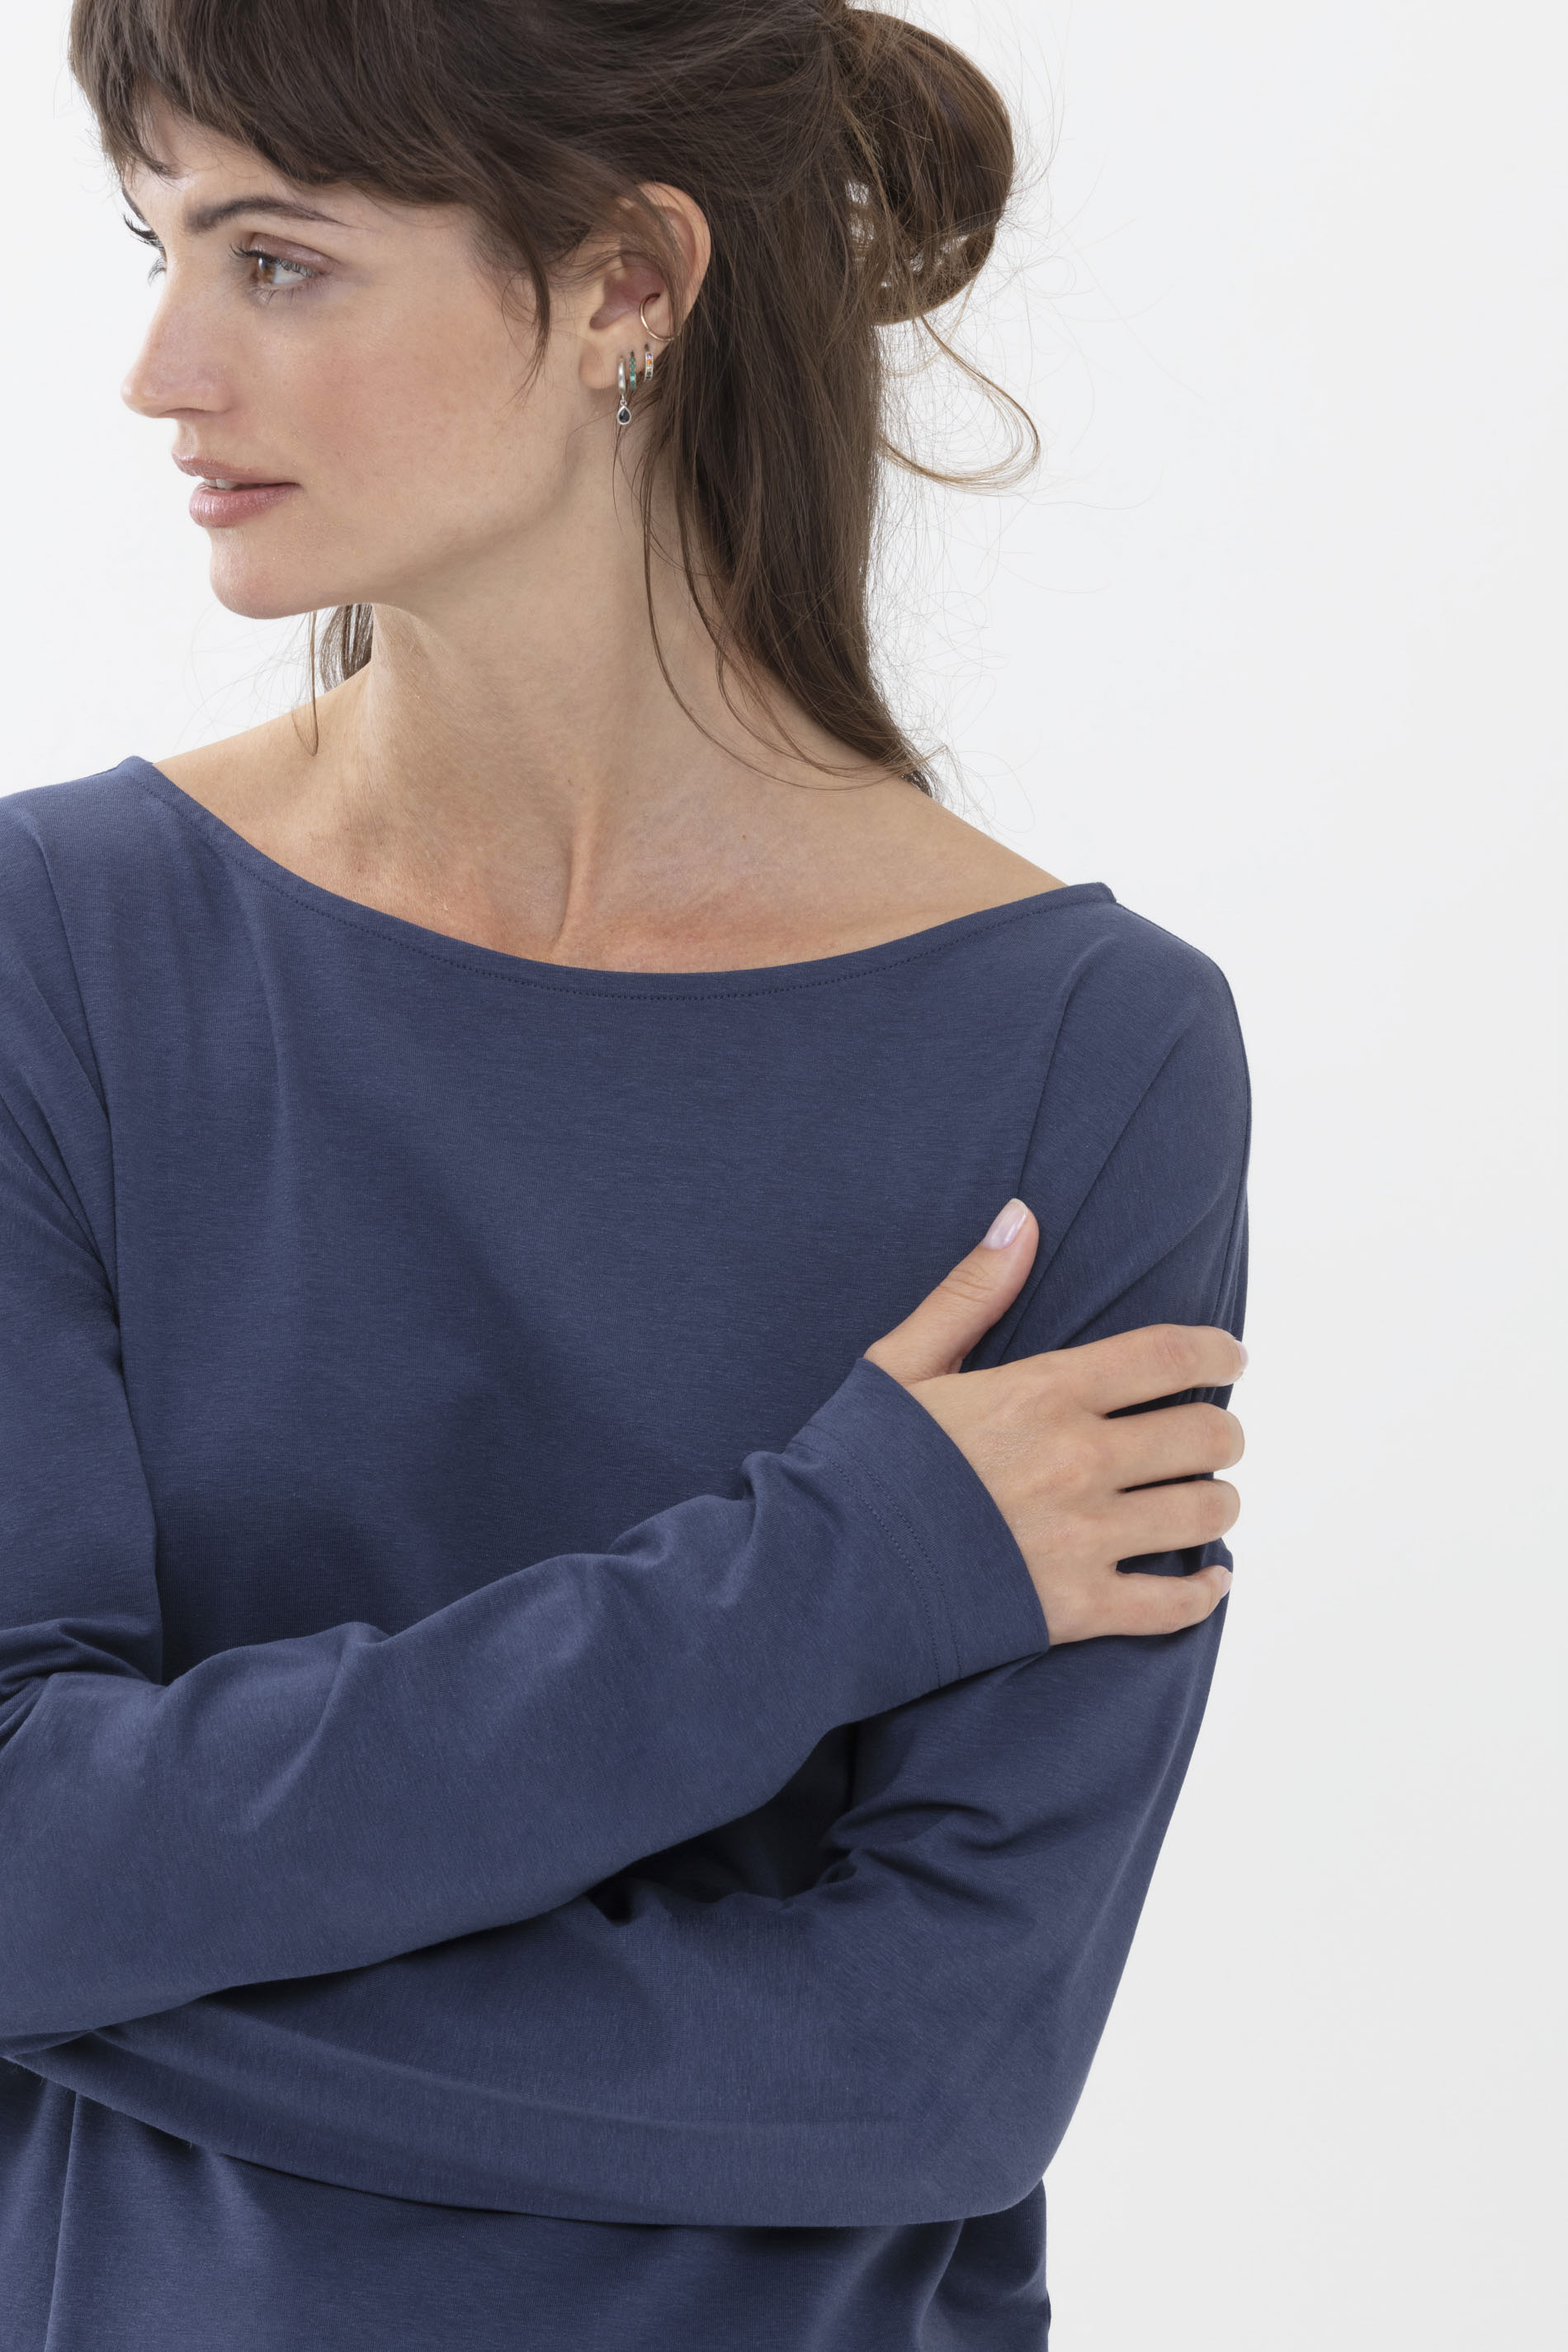 Long-sleeved shirt New Blue Serie Aya Detail View 01 | mey®